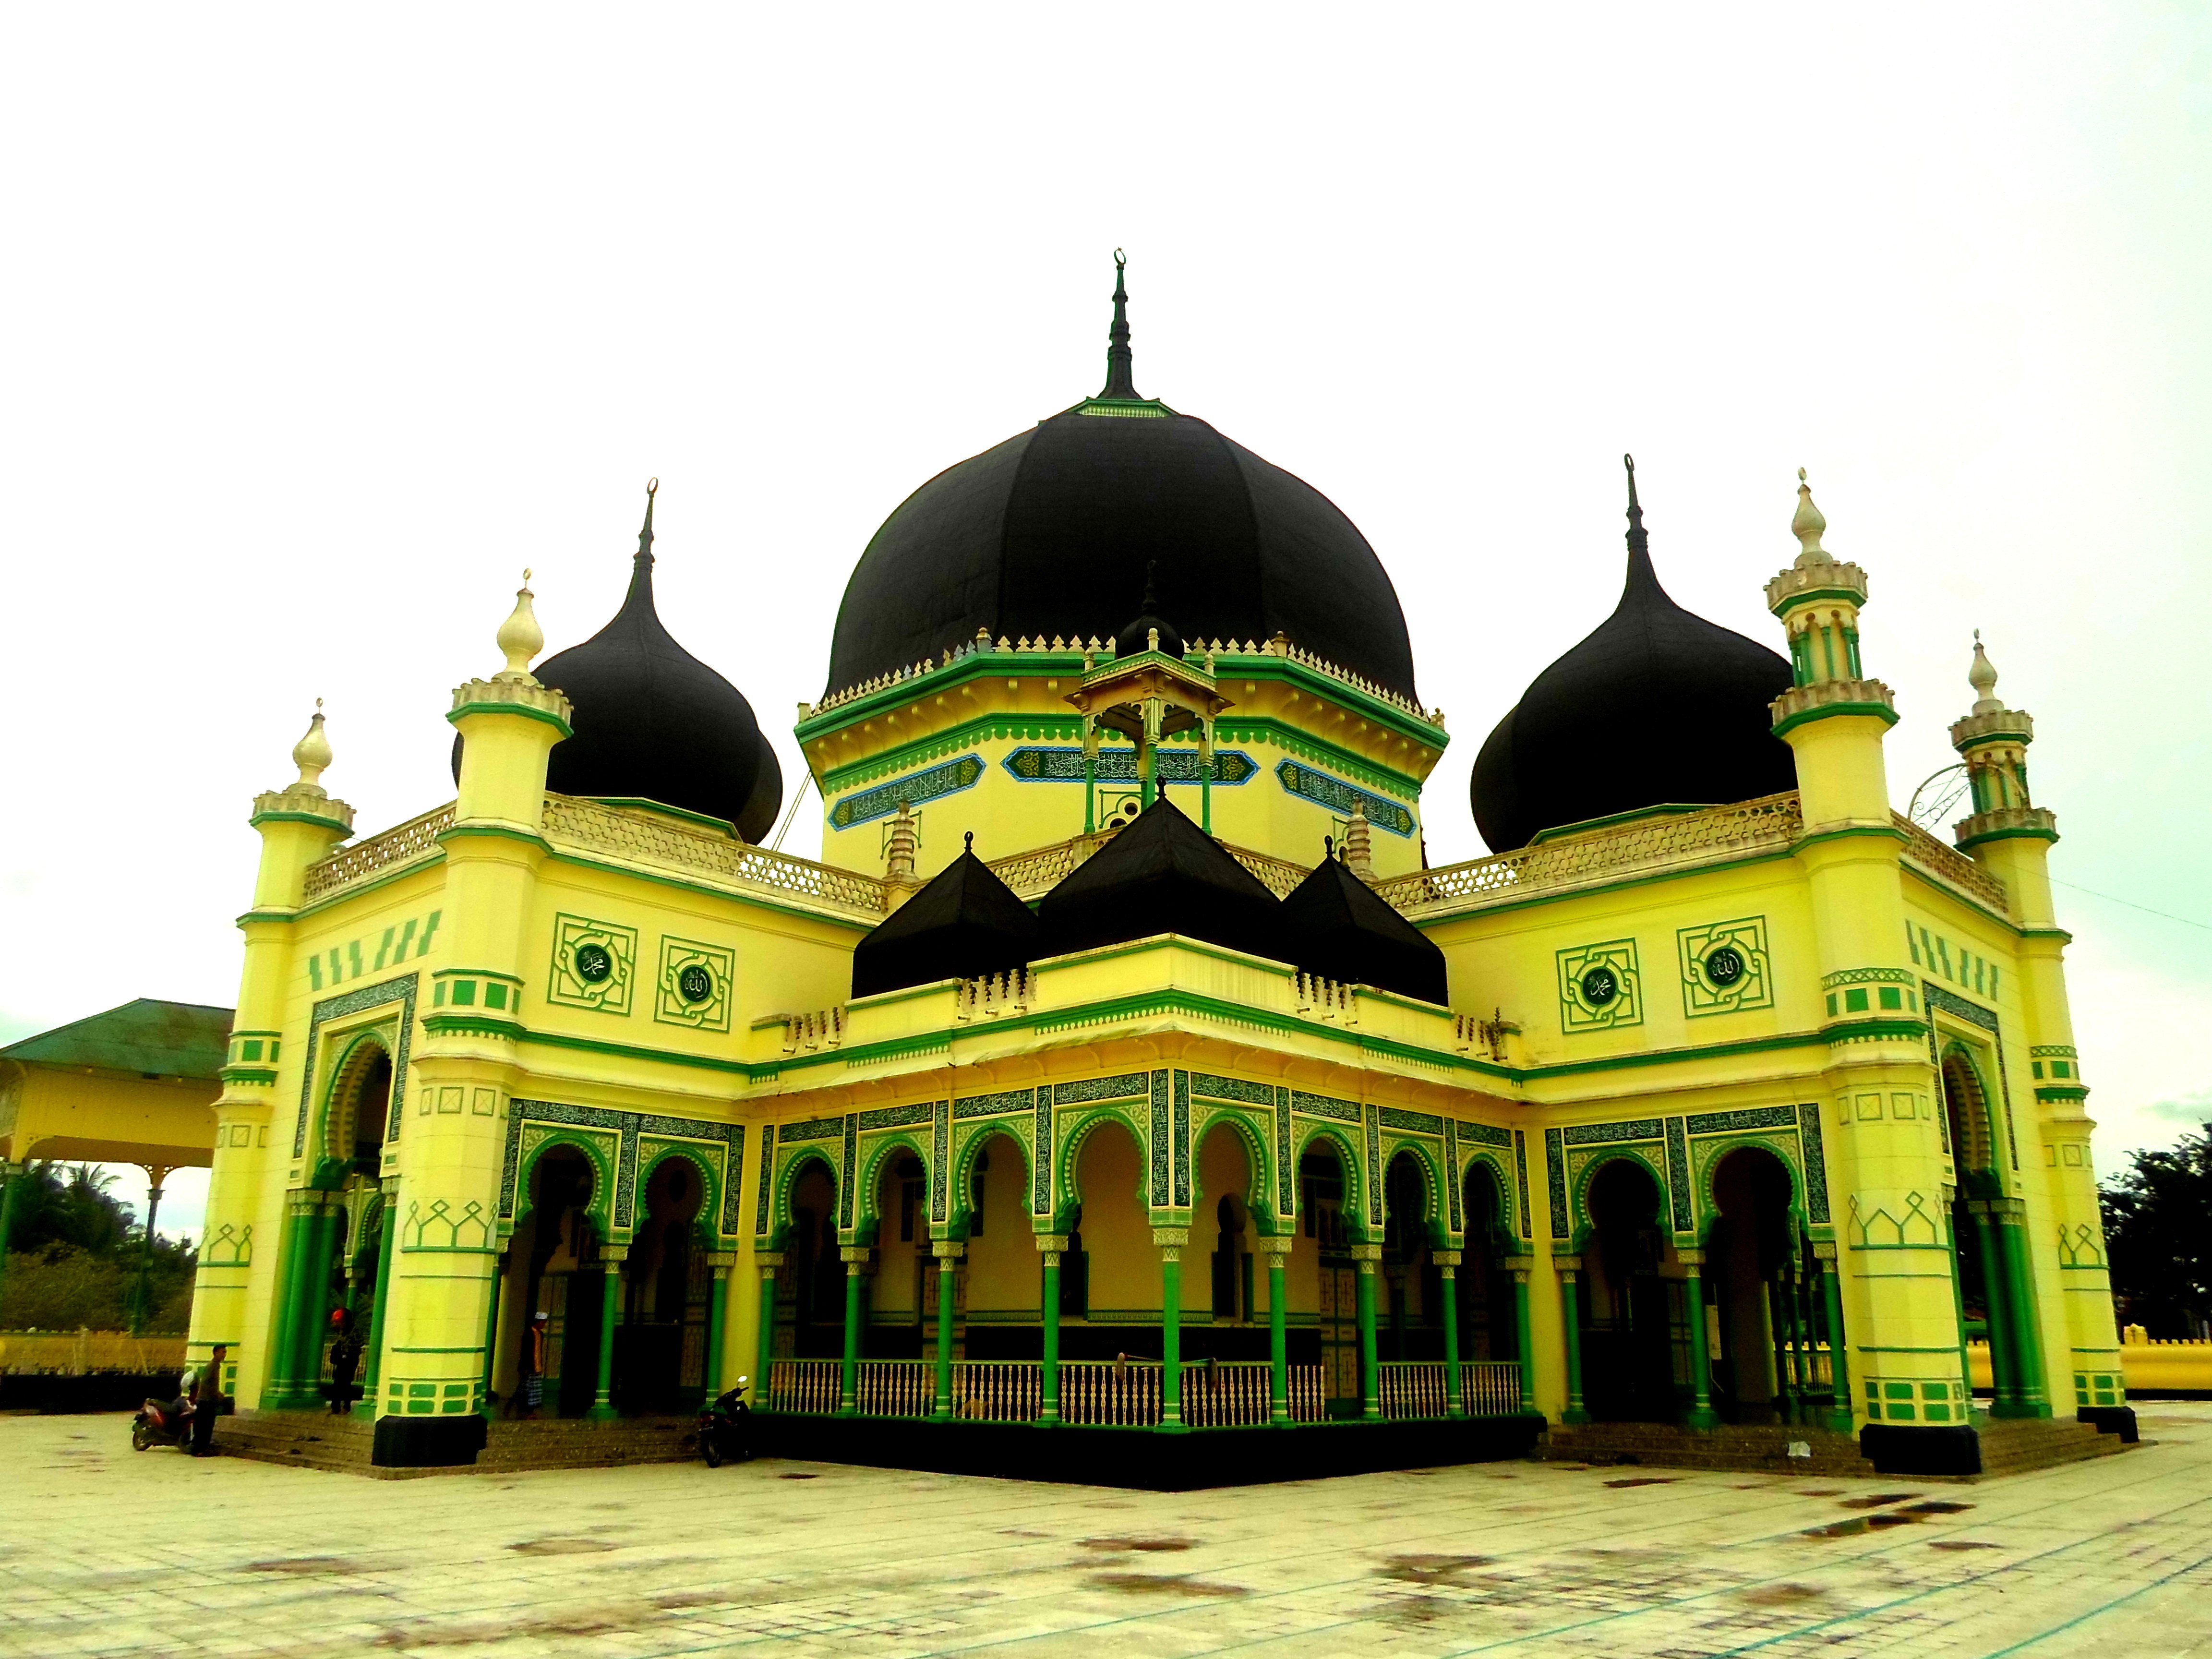  masjid  Gallery